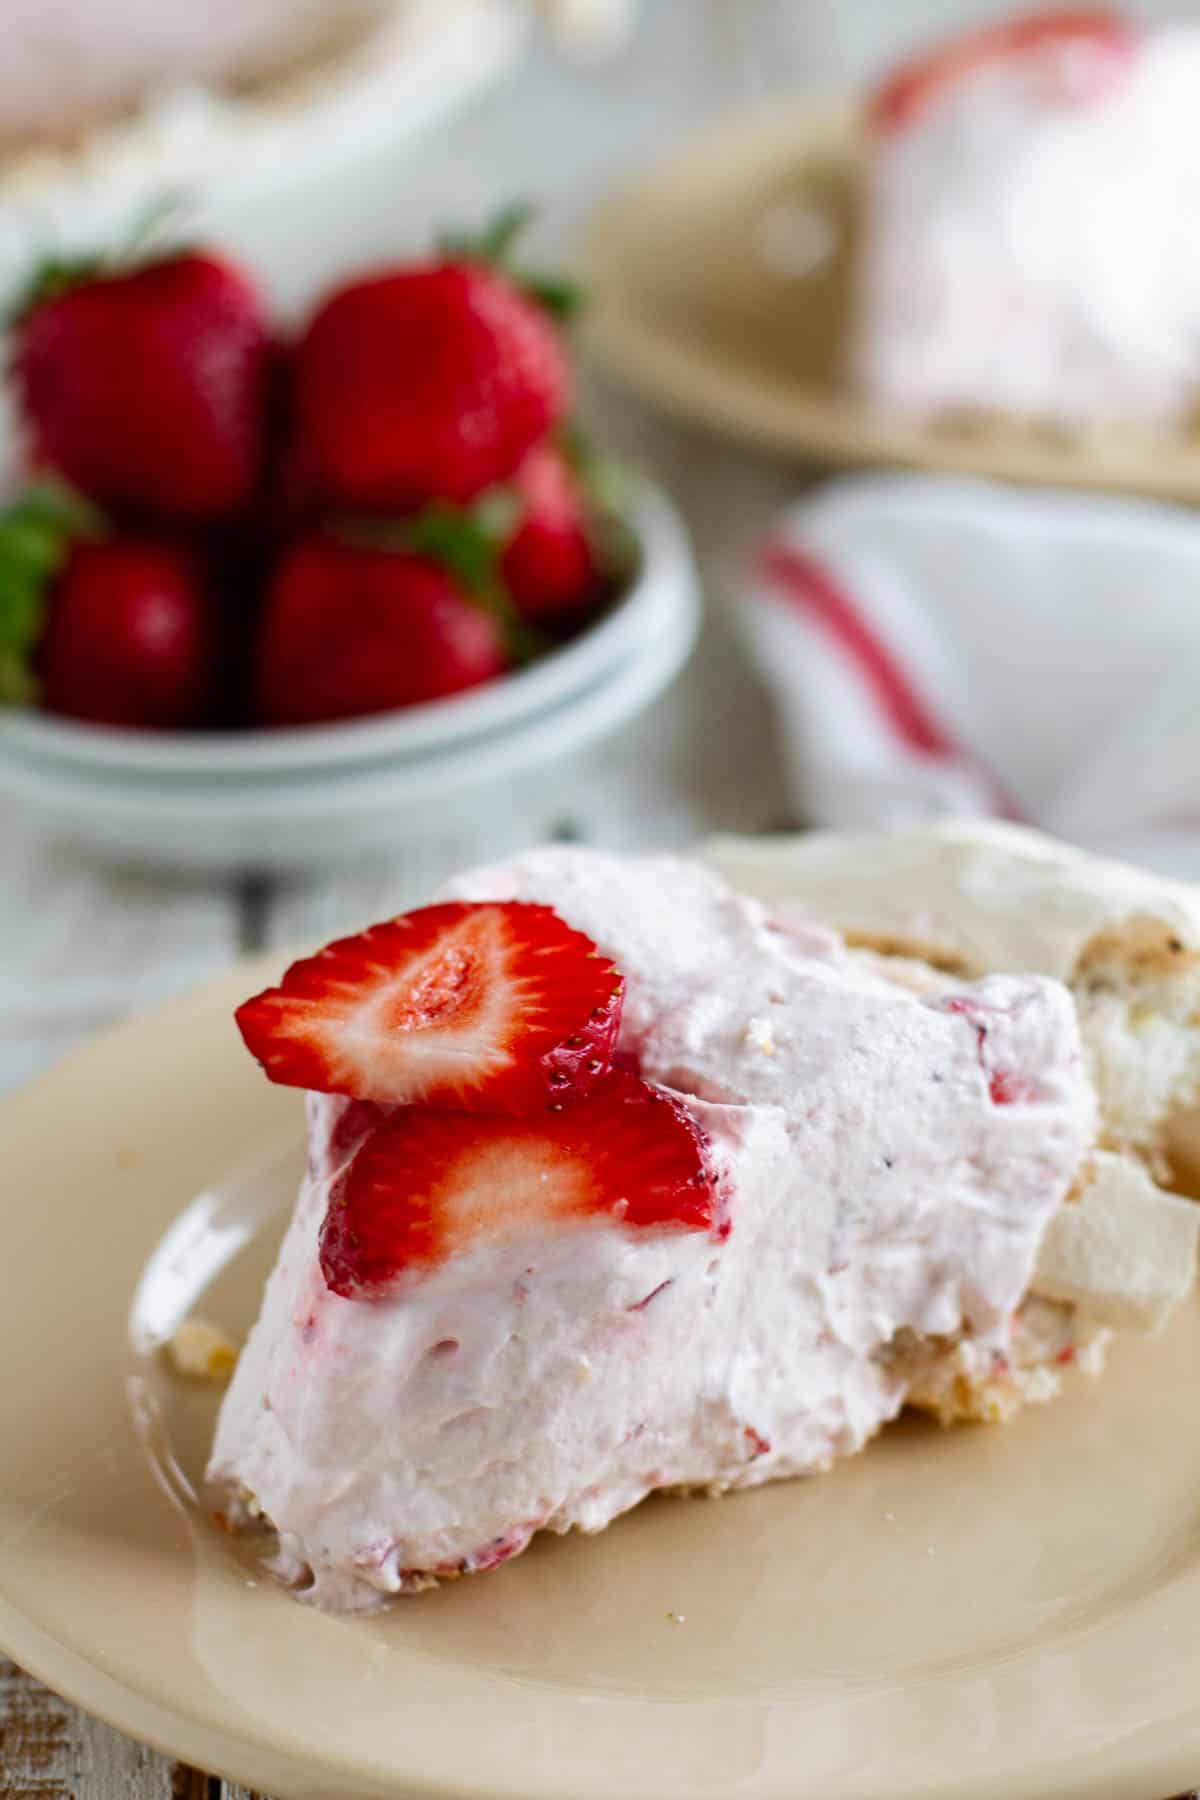 Slice of strawberry cream angel pie on a plate.